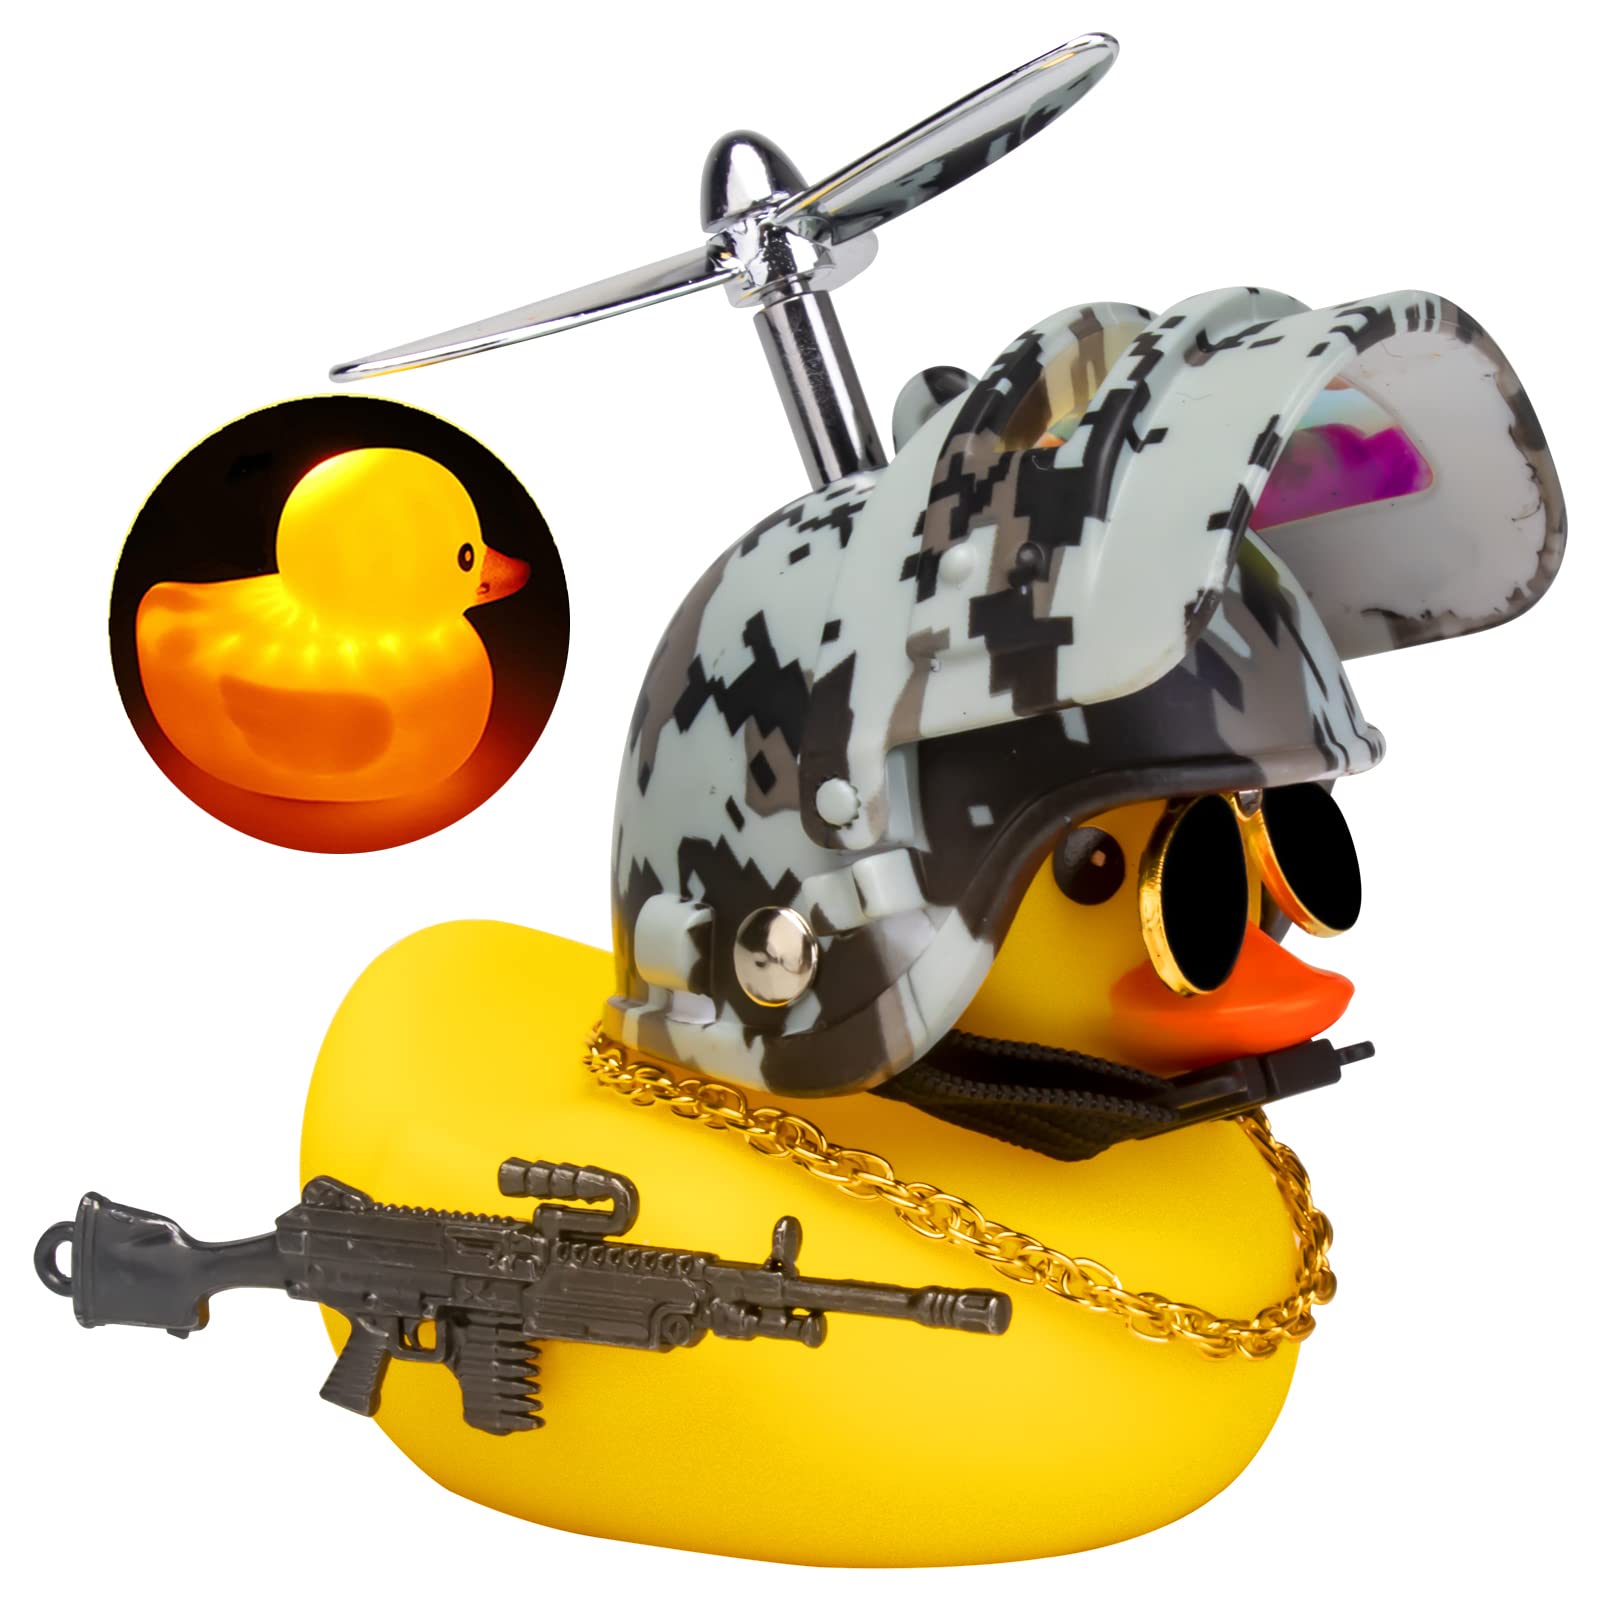 wonuu Rubber Duck Car Ornaments, Squeeze Duck Dashboard